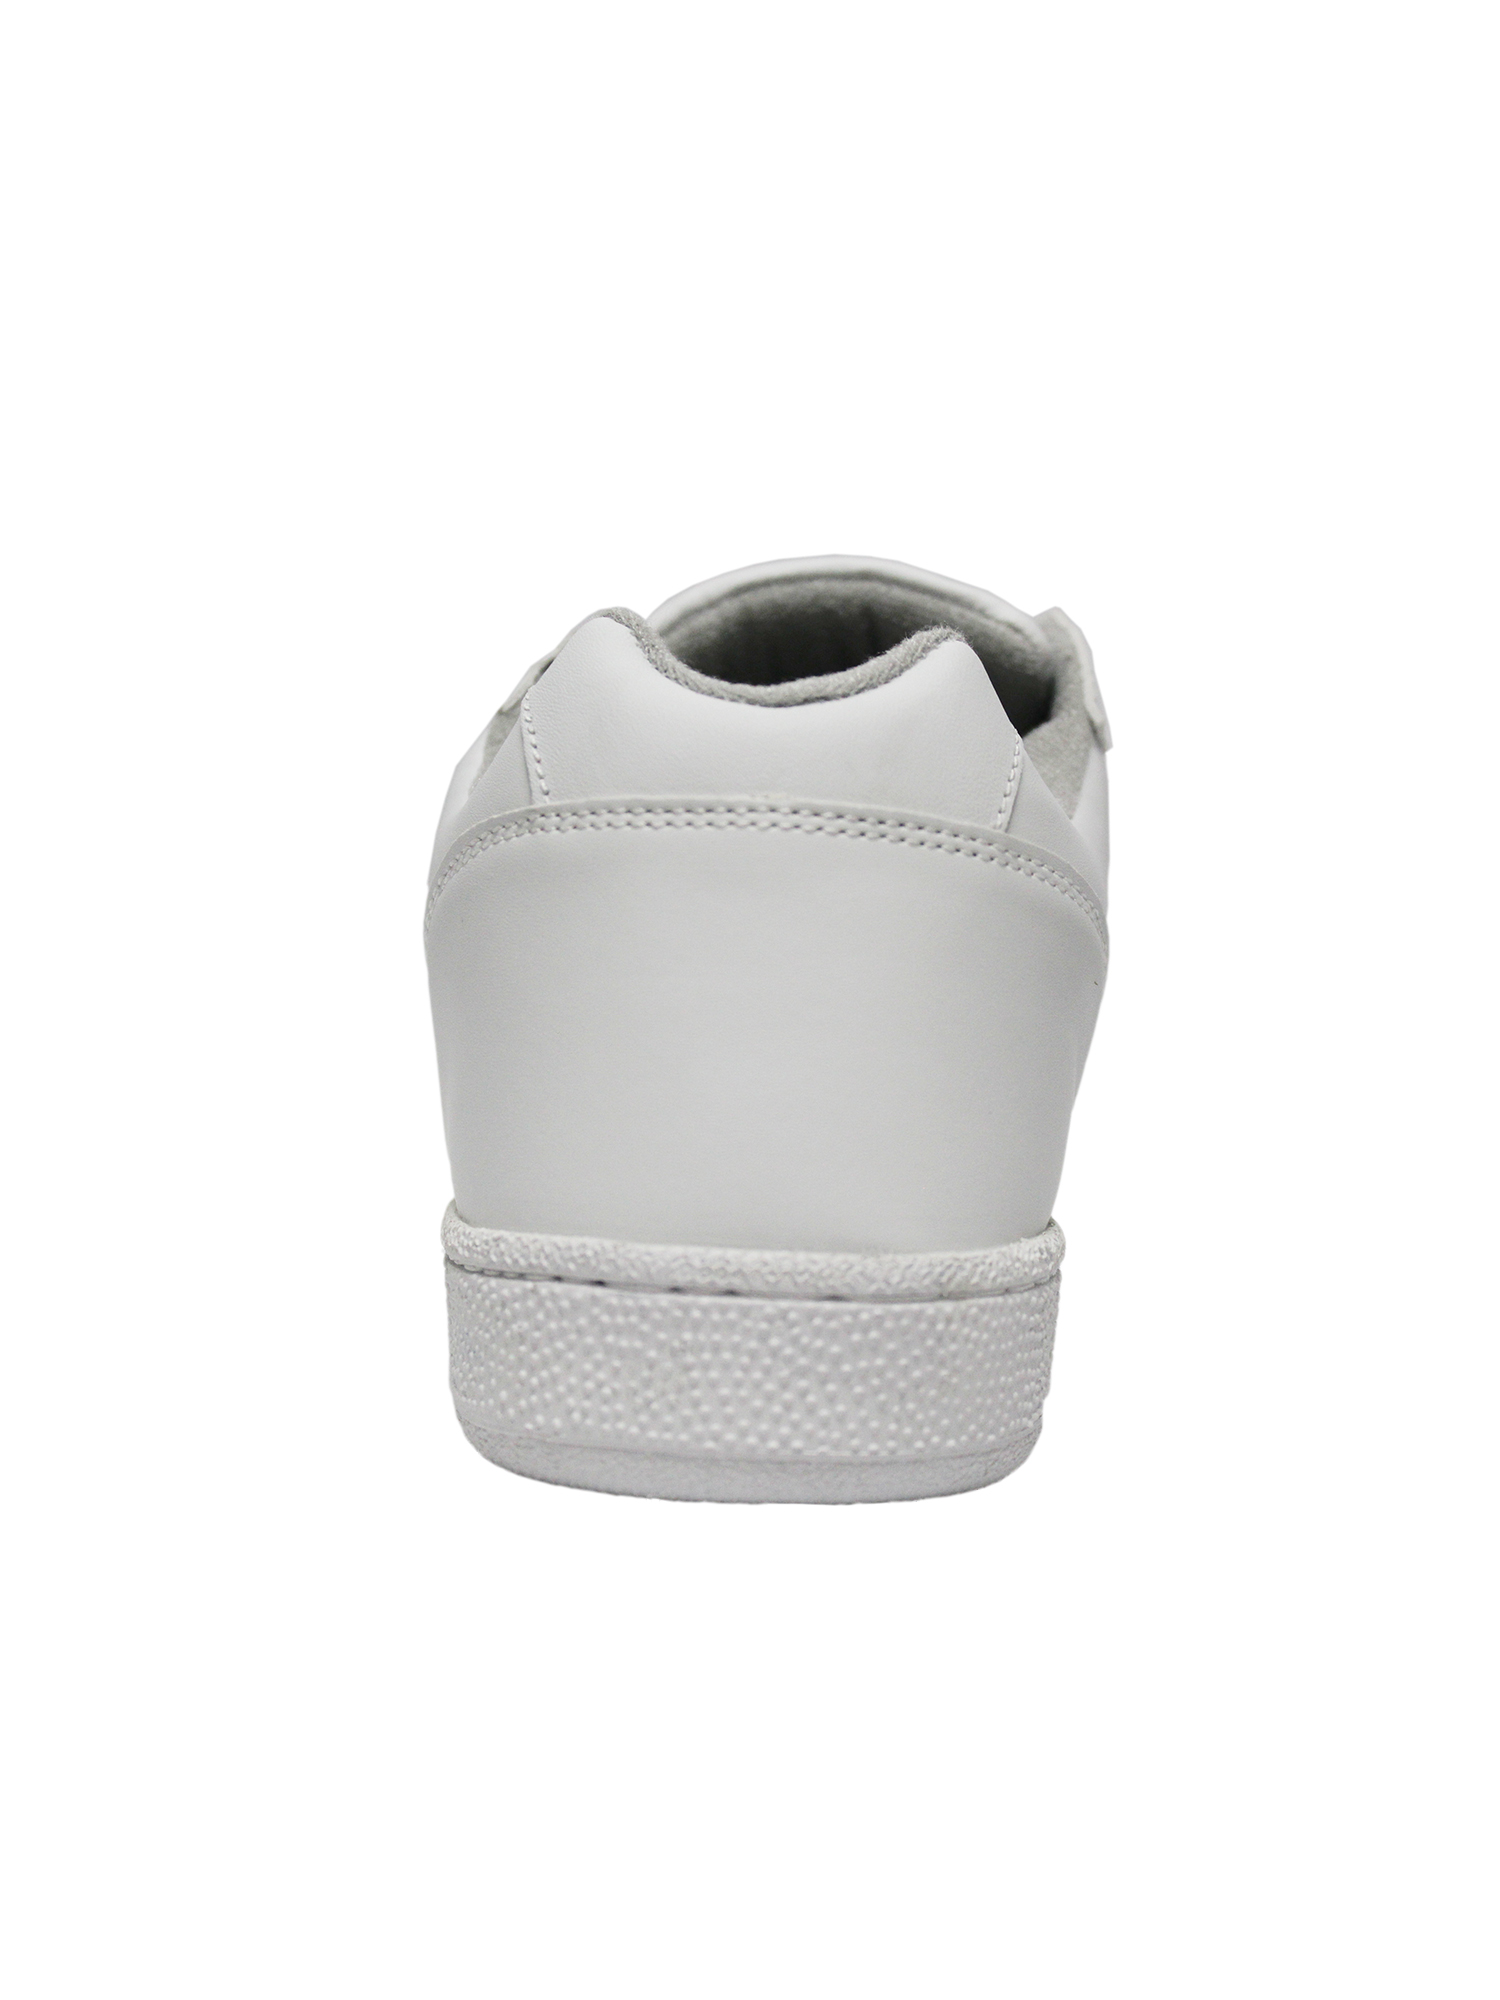 Tanleewa Men's Leather Strap Sneakers Lightweight Hook and Loop Walking Shoe Size 12 Adult Male - image 5 of 5